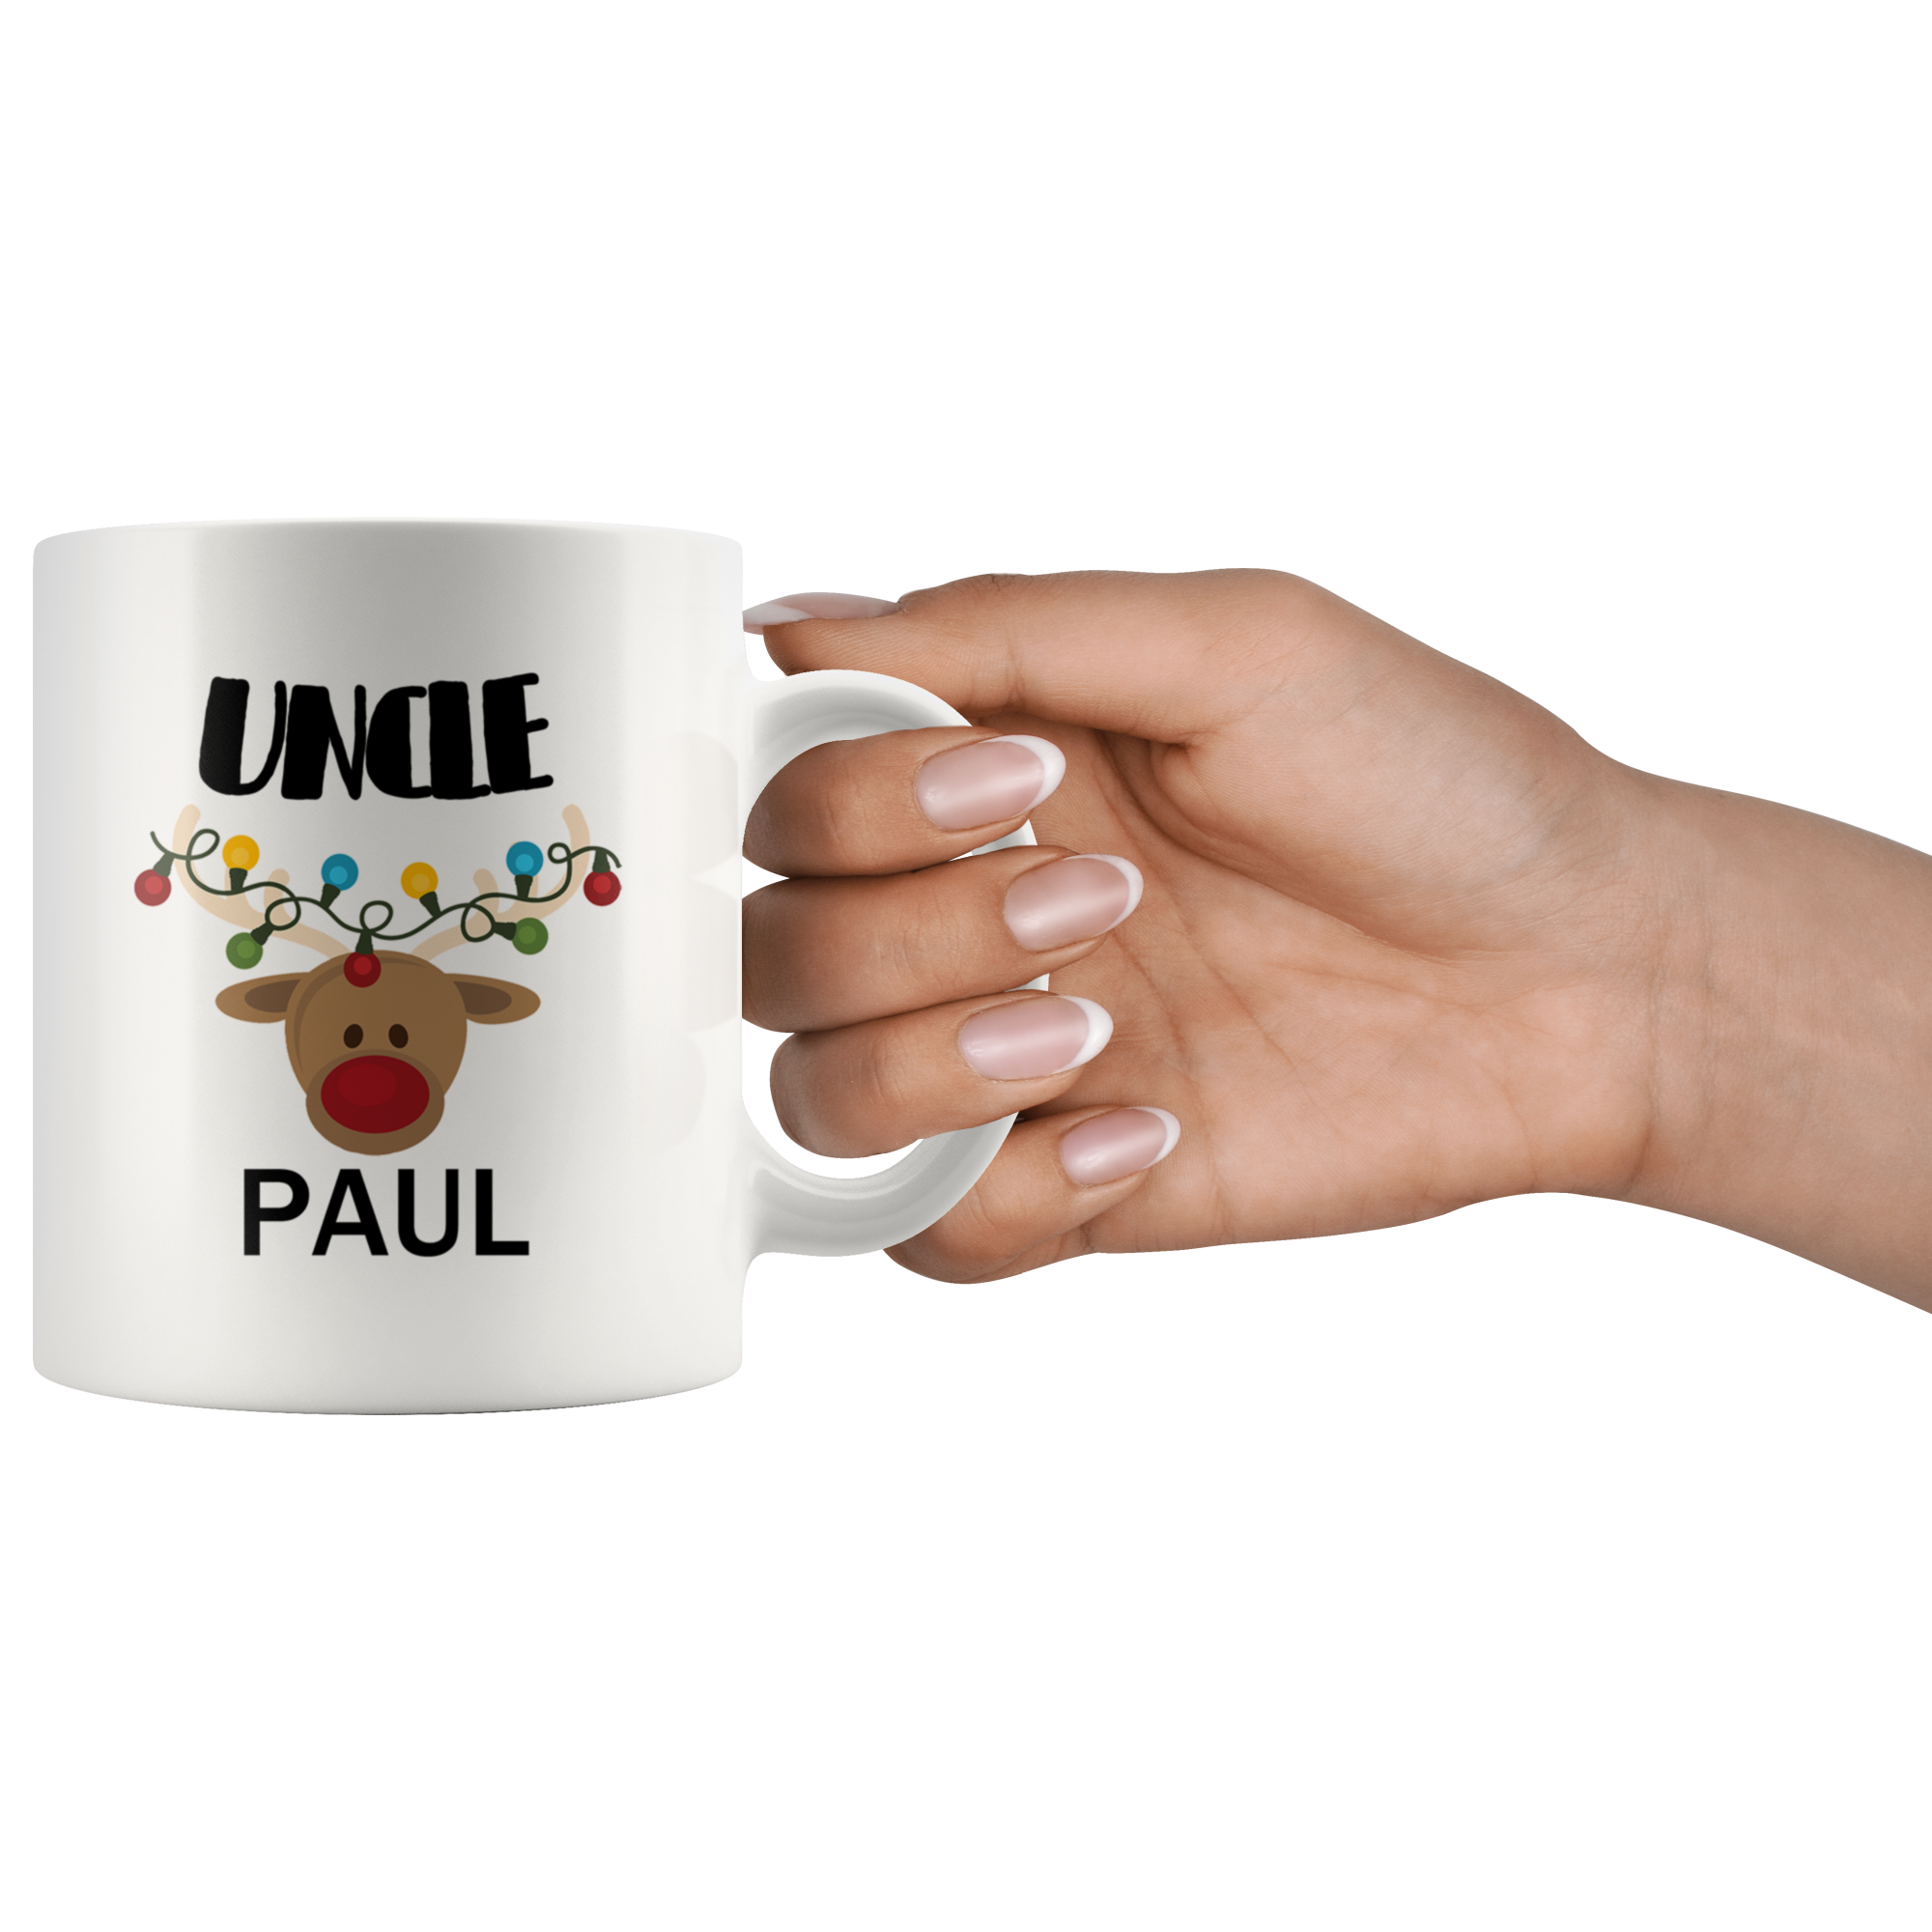 UNCLE PAUL MUG - Guestbookery